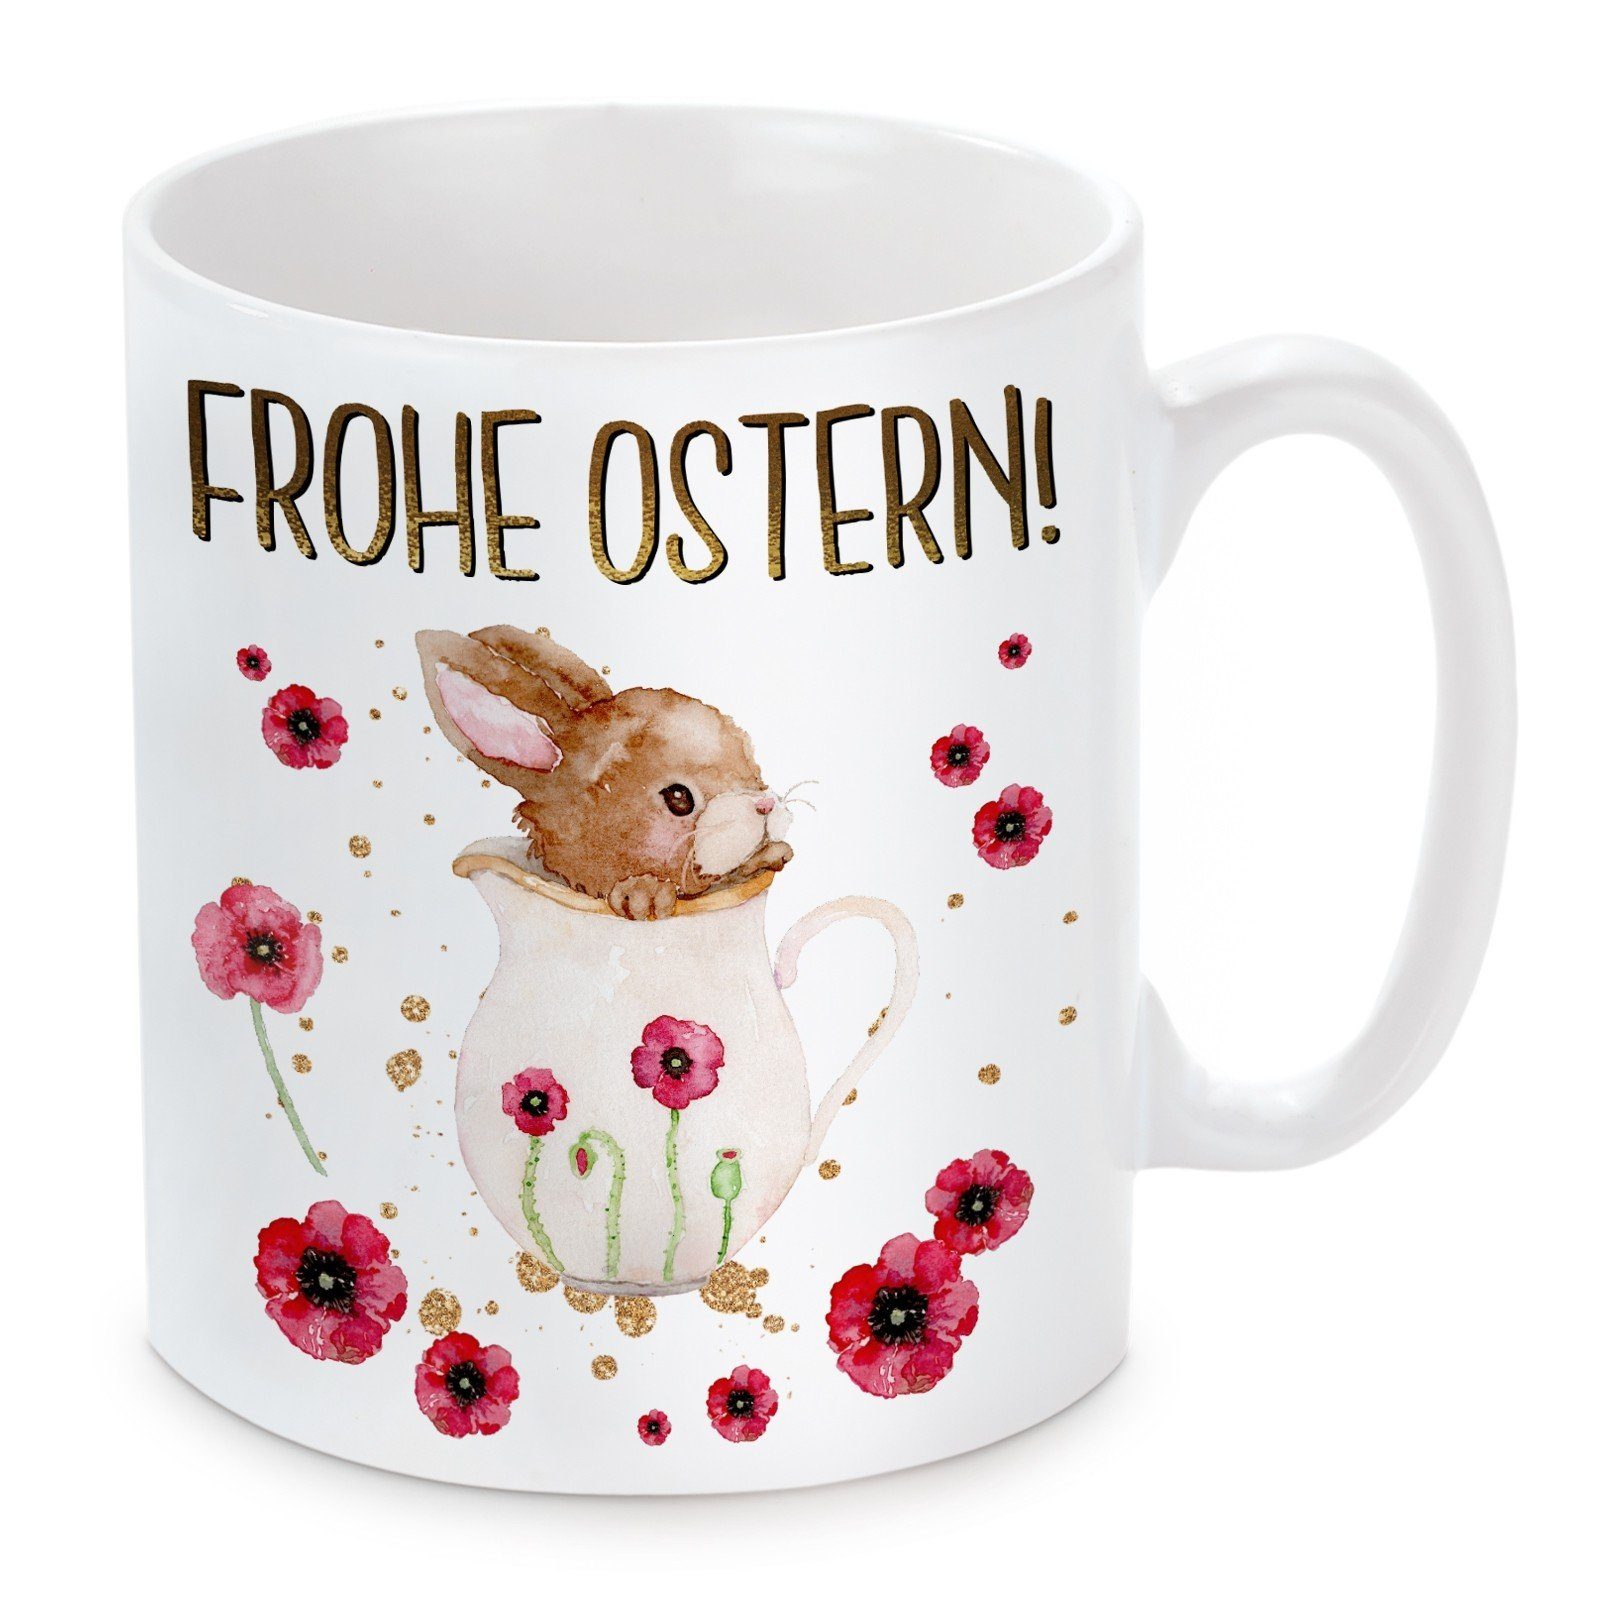 Herzbotschaft Tasse Kaffeebecher mit Motiv Frohe Ostern!, Keramik, Kaffeetasse spülmaschinenfest und mikrowellengeeignet | Teetassen